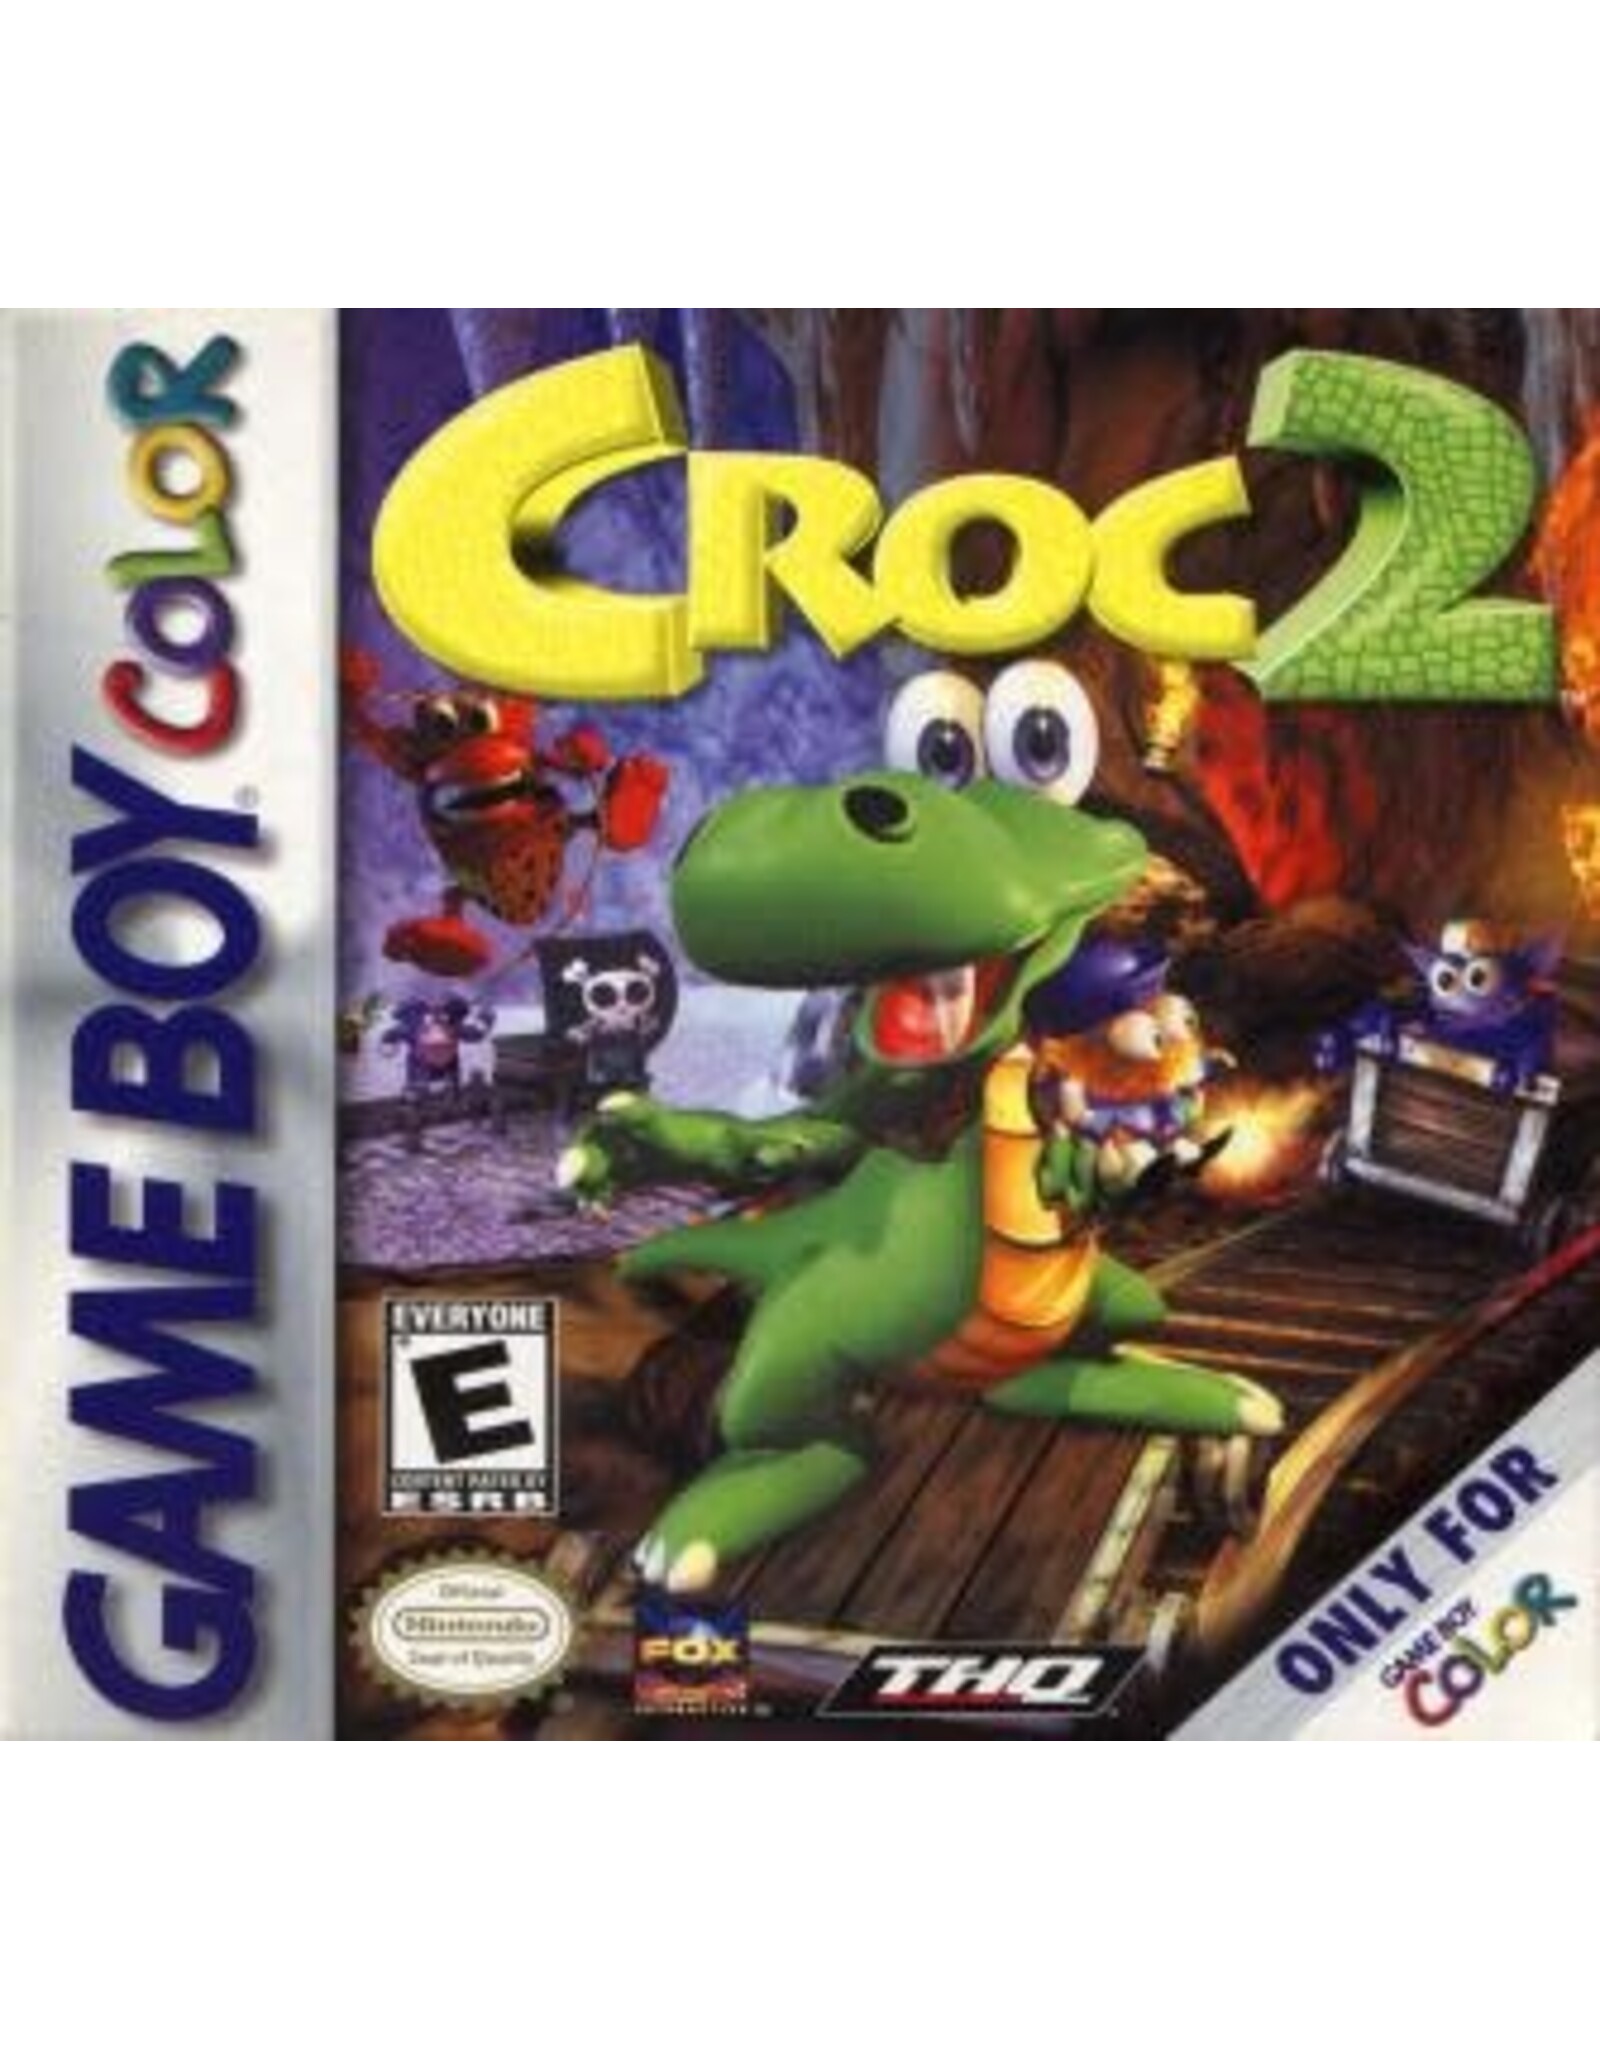 Game Boy Color Croc 2 (Cart Only)